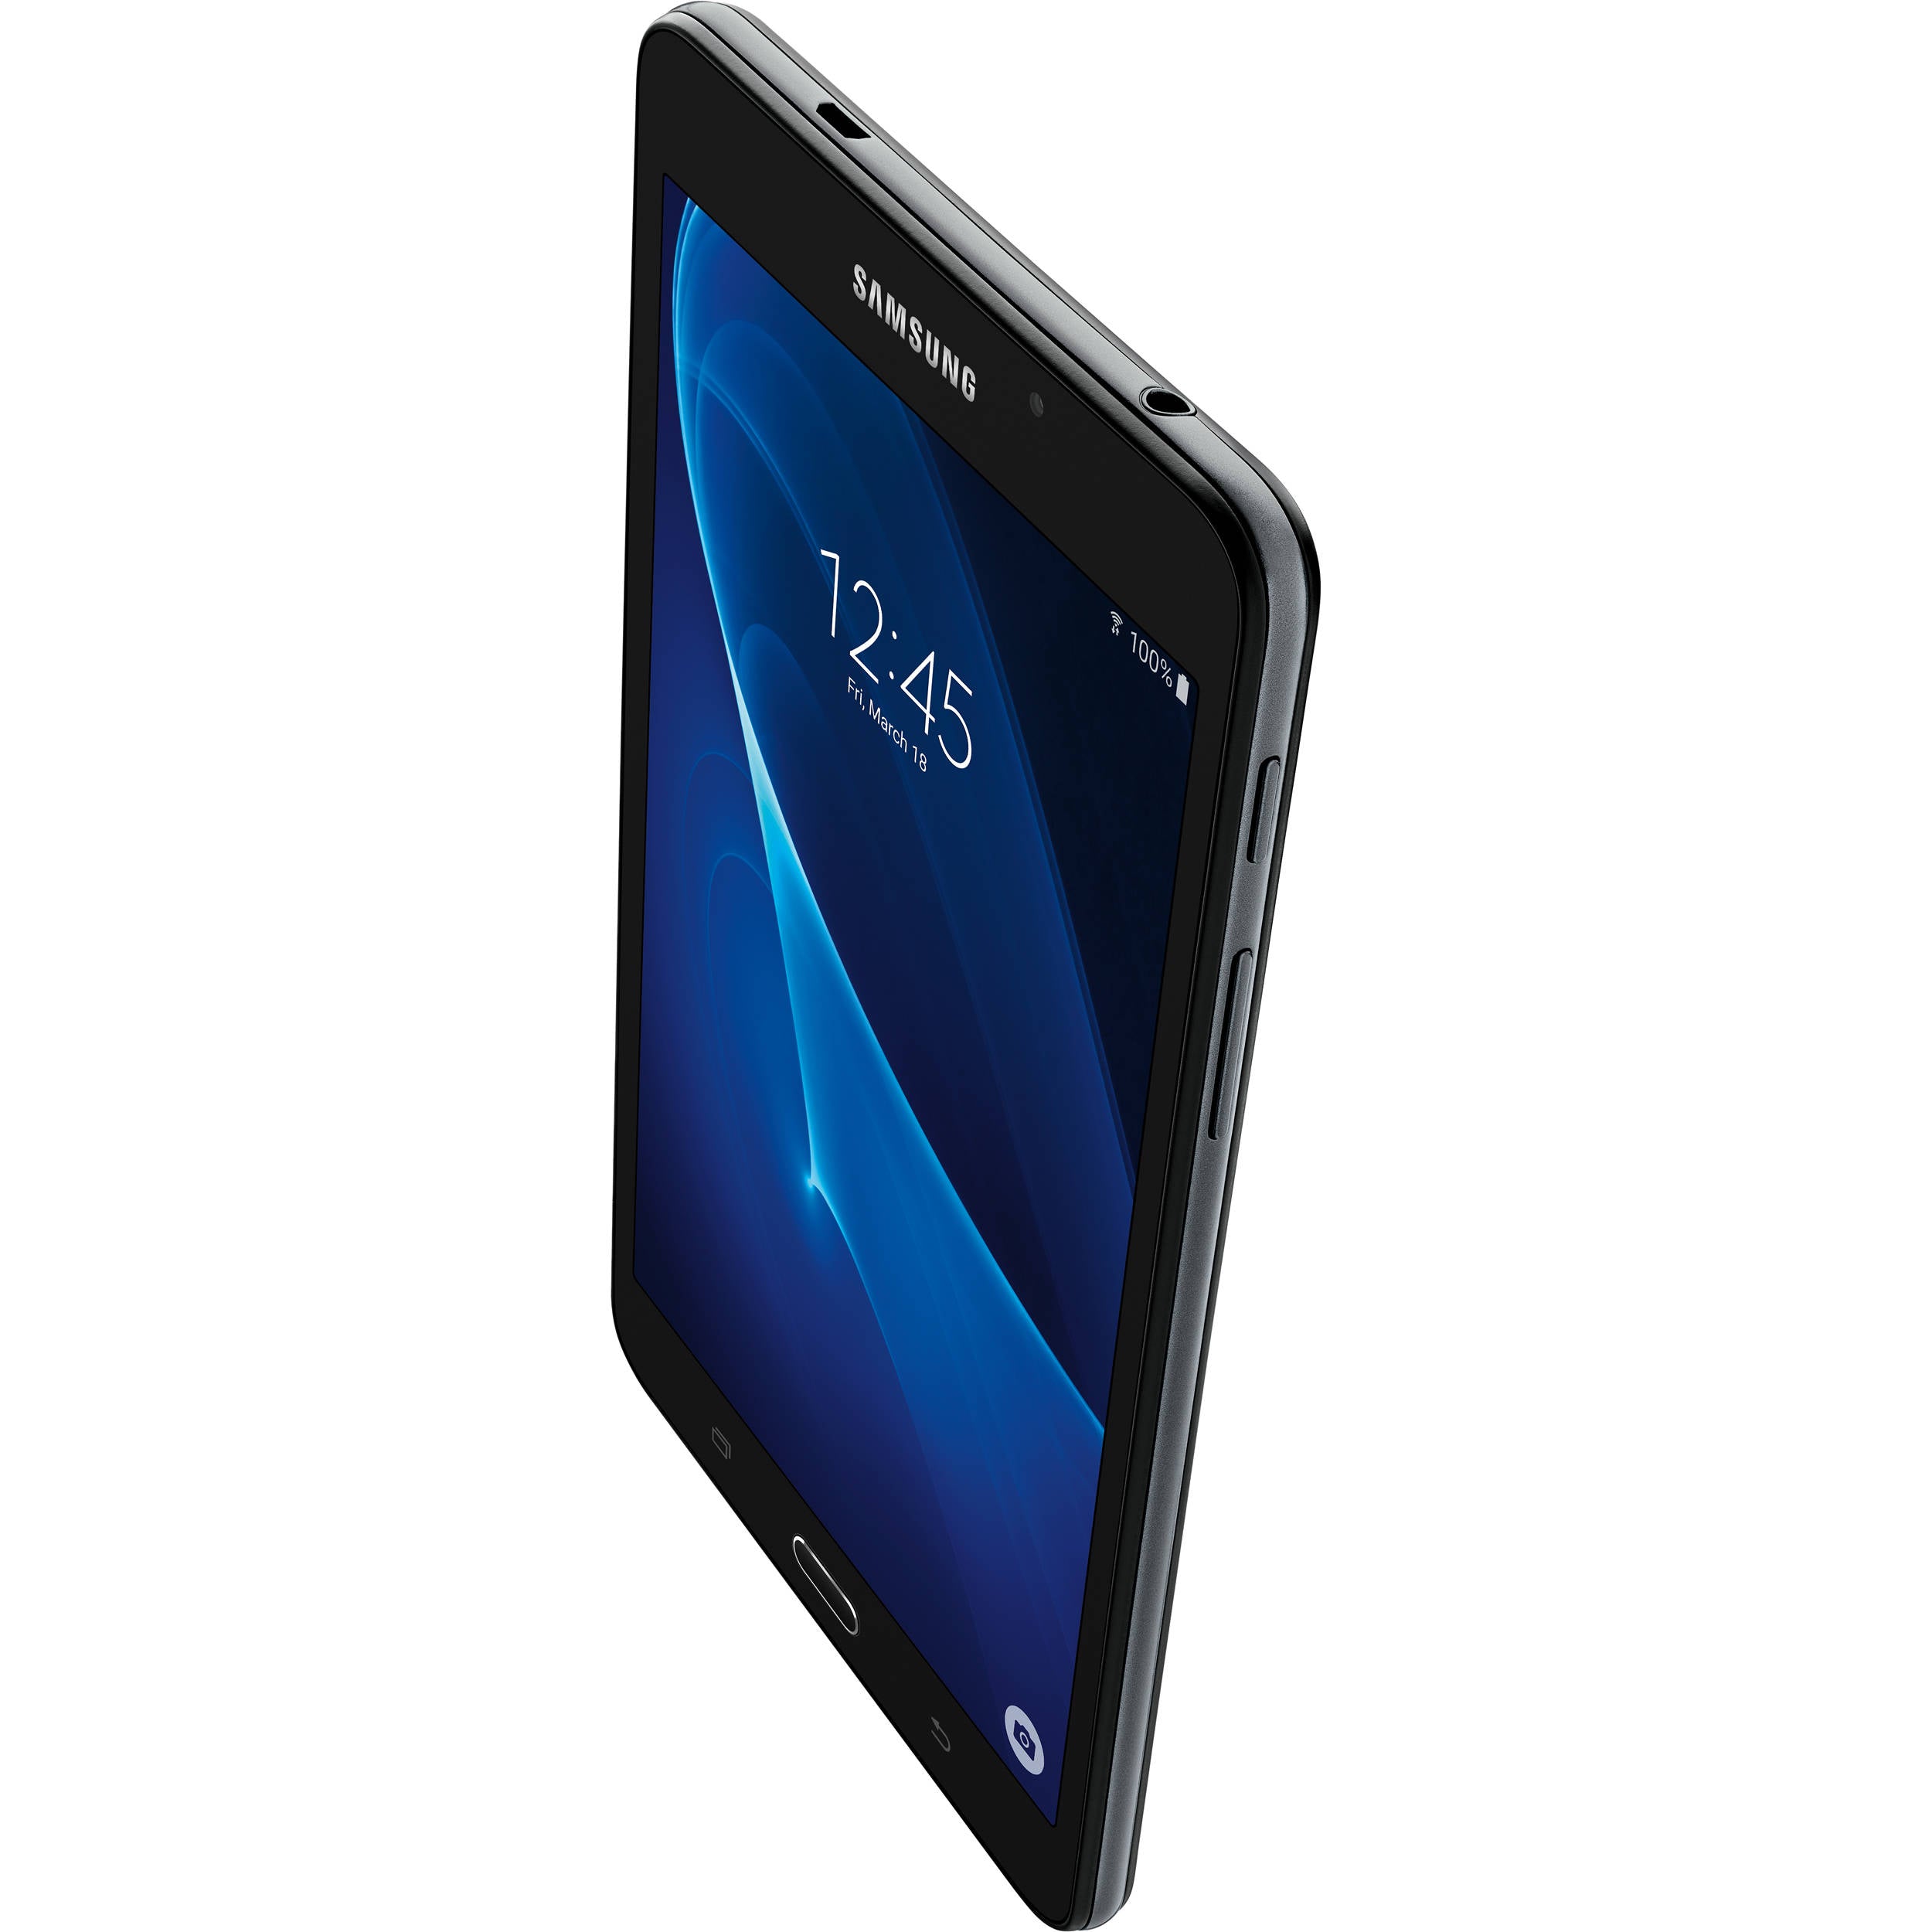 Samsung SM-T280NZKMXAR-RBC 7.0" Galaxy Tab A 8GB Wi-Fi Android Tablet Black - Certified Refurbished